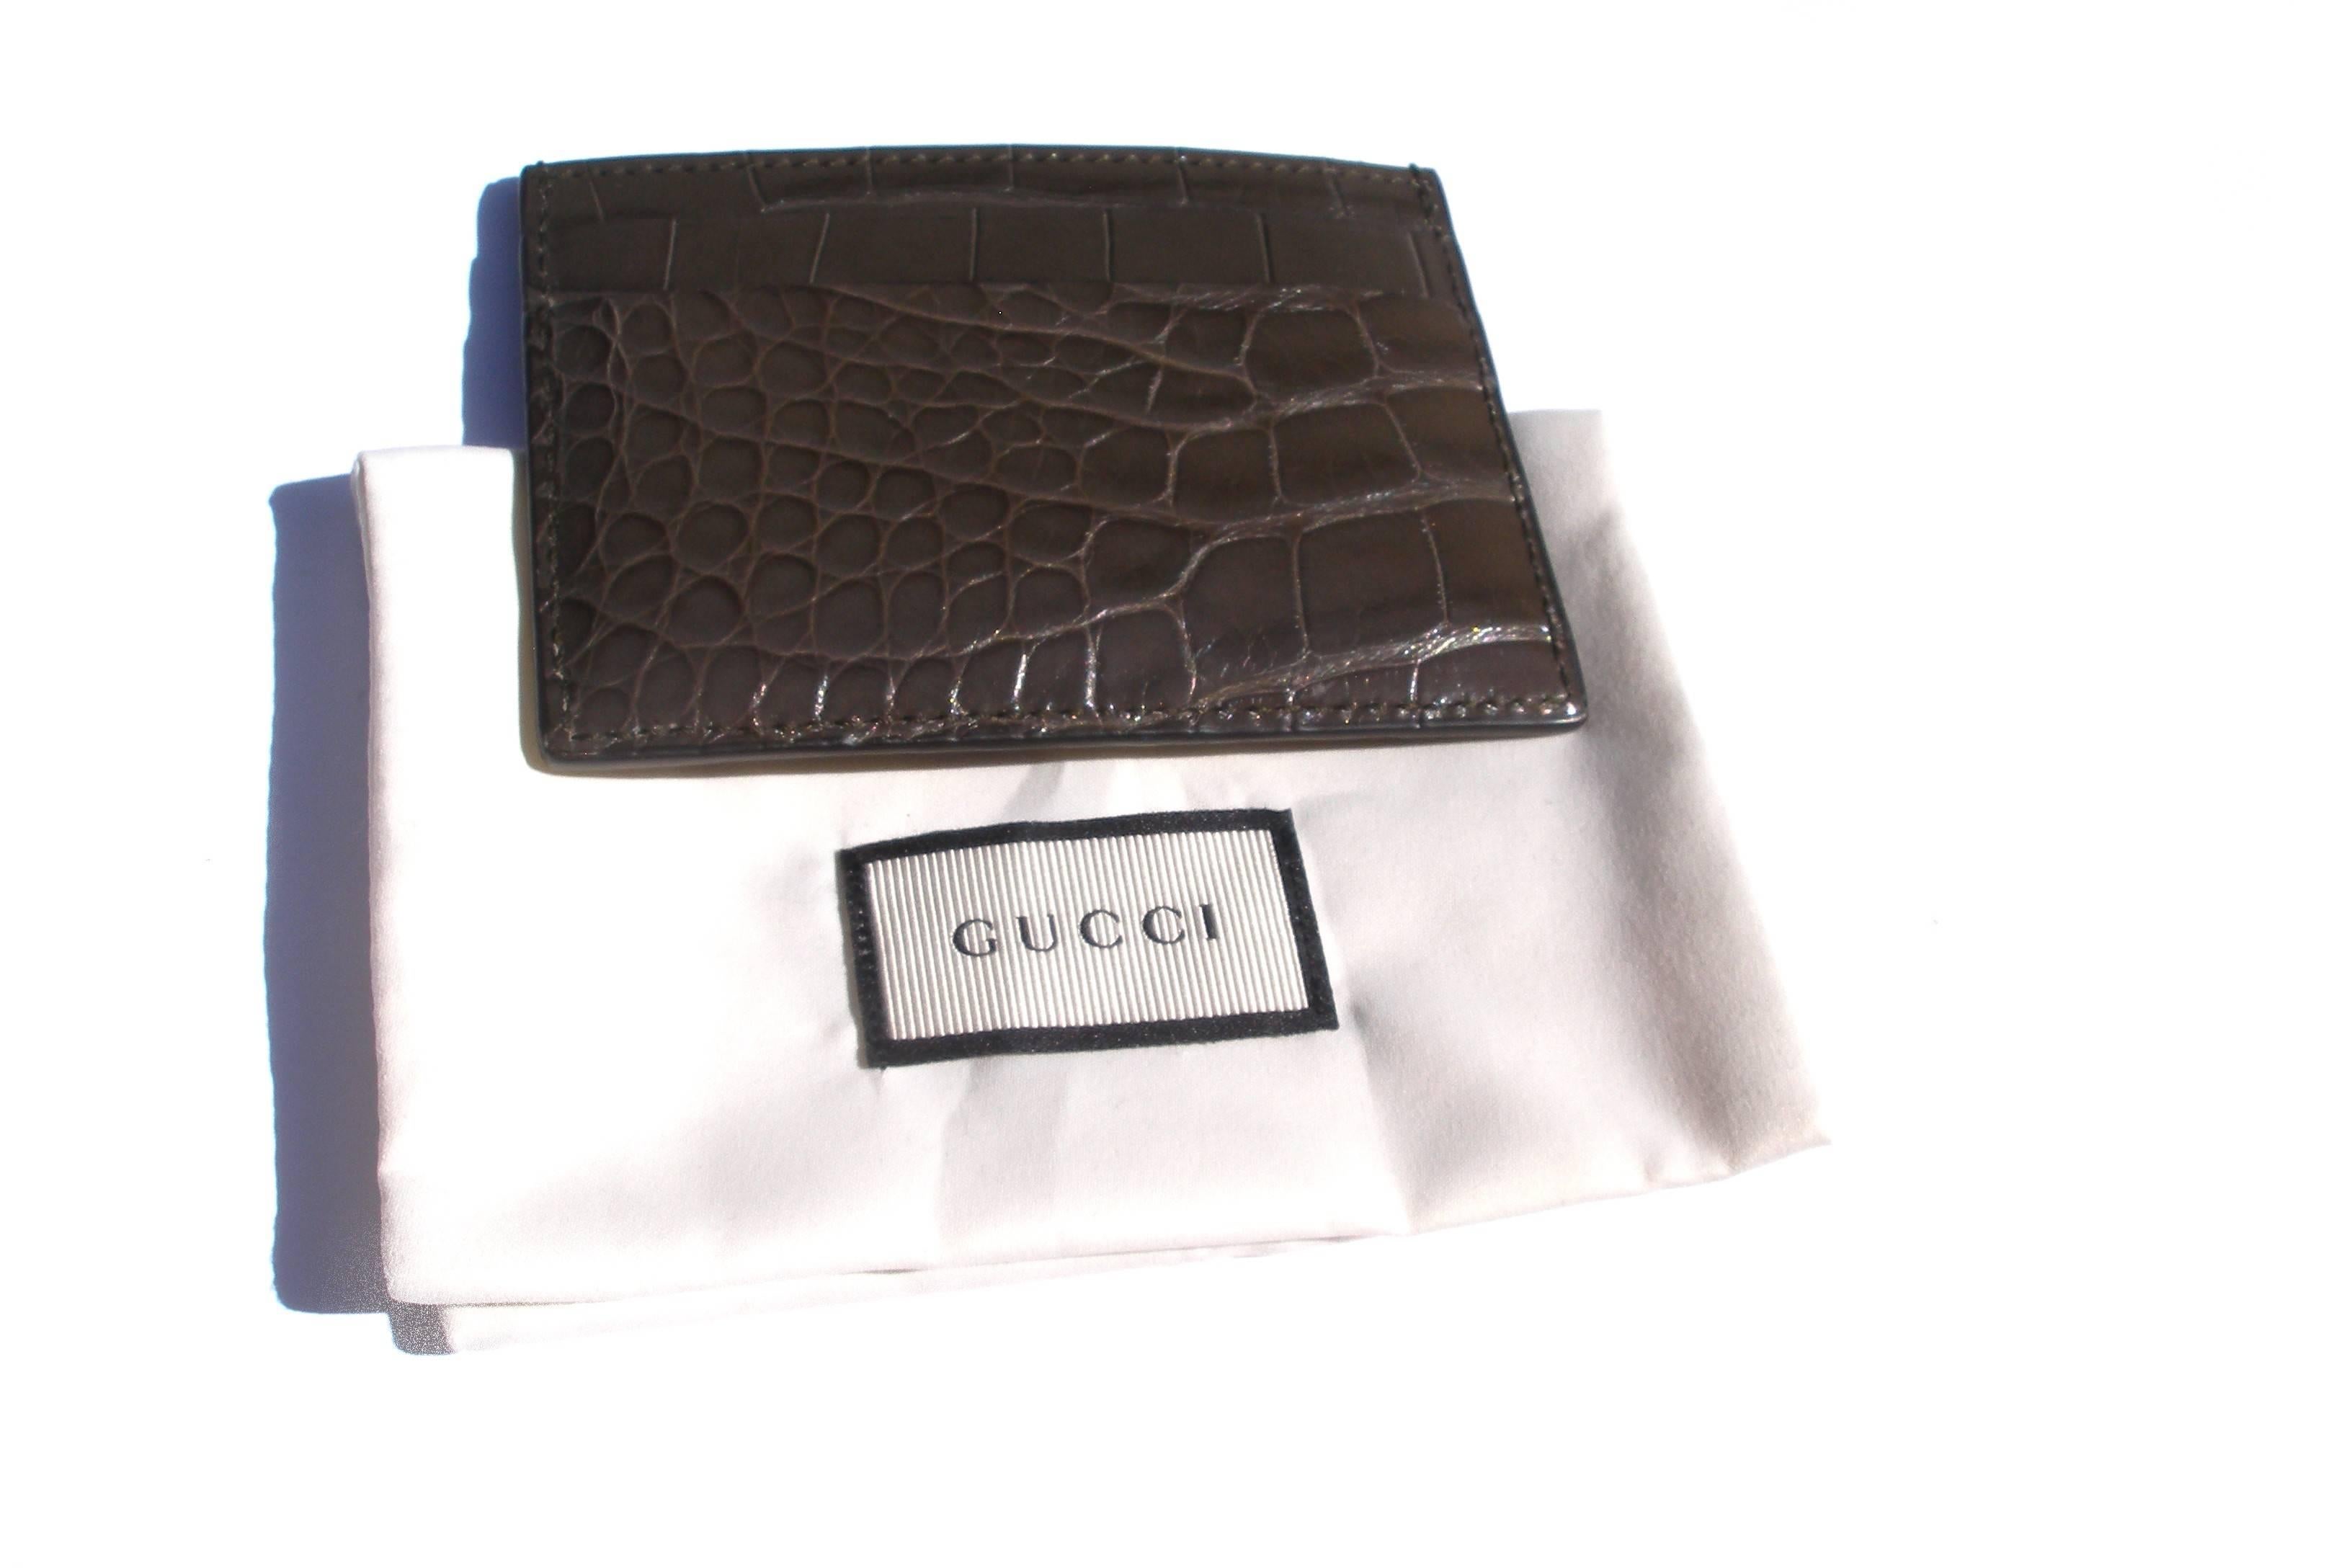  GUCCI Crocodile Card Case Millémiun color Rétail Price $ 820 / BRAND NEW 2